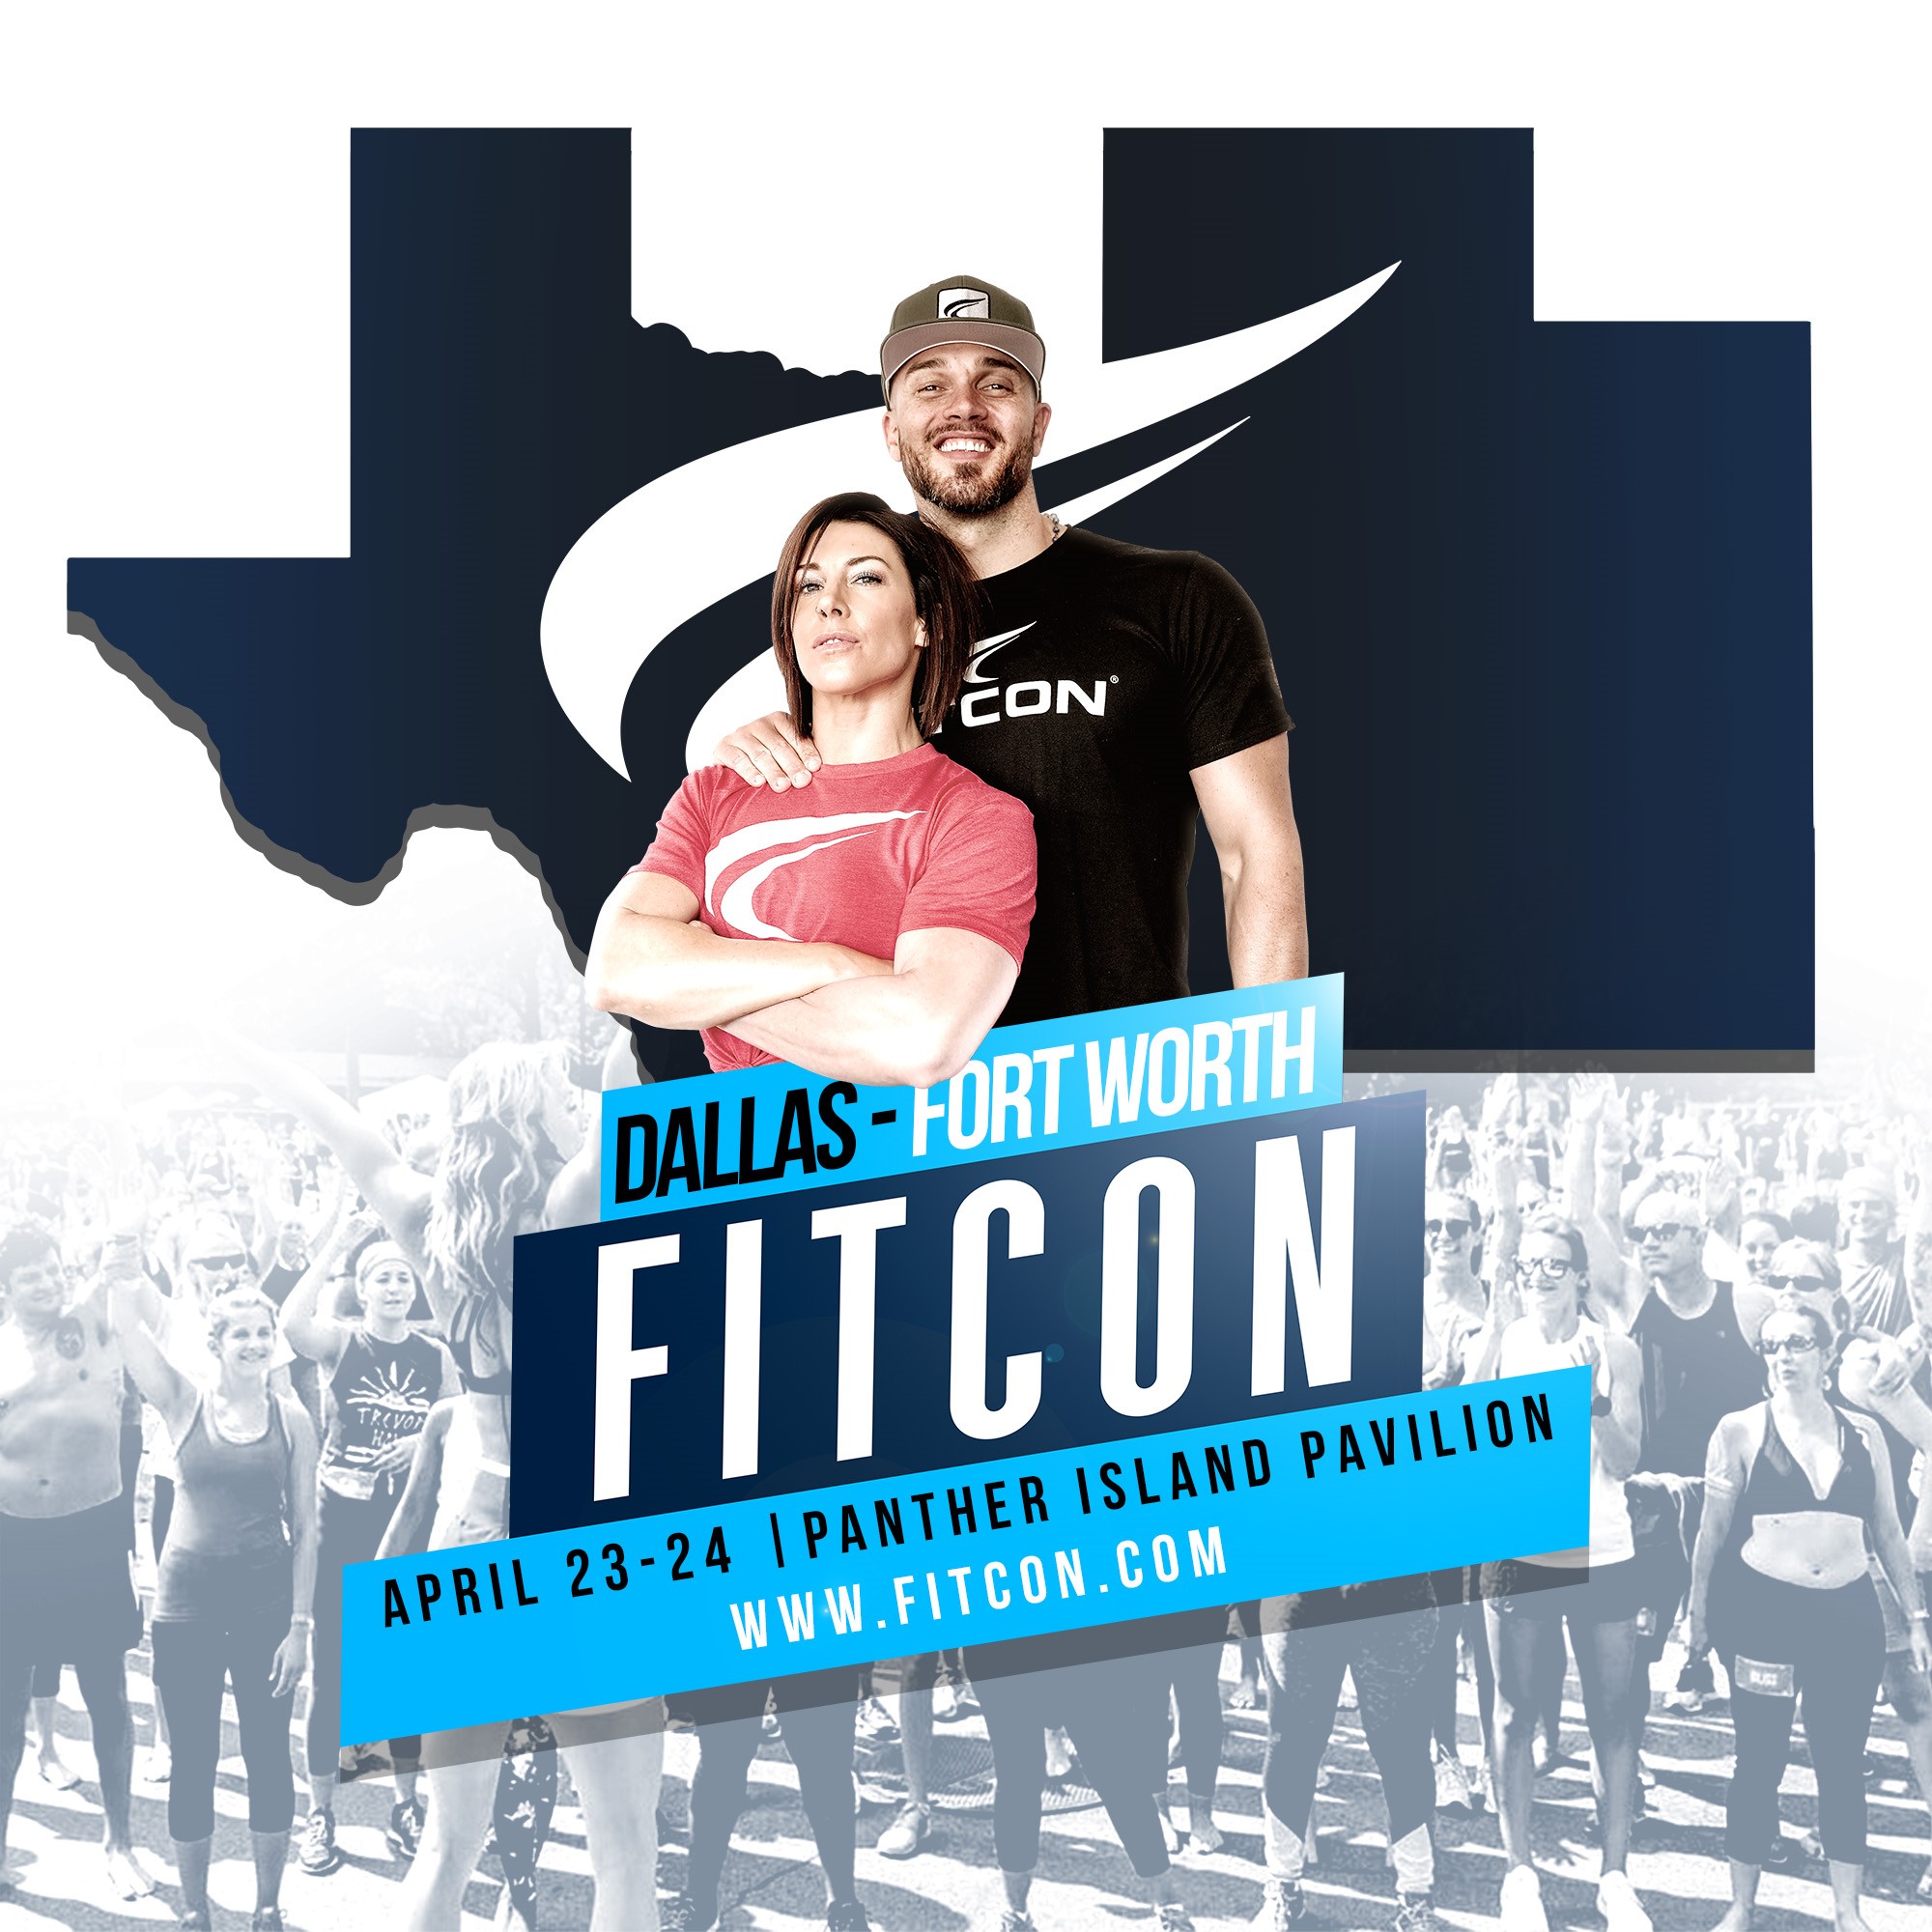 FitCon Texas Panther Island Pavilion